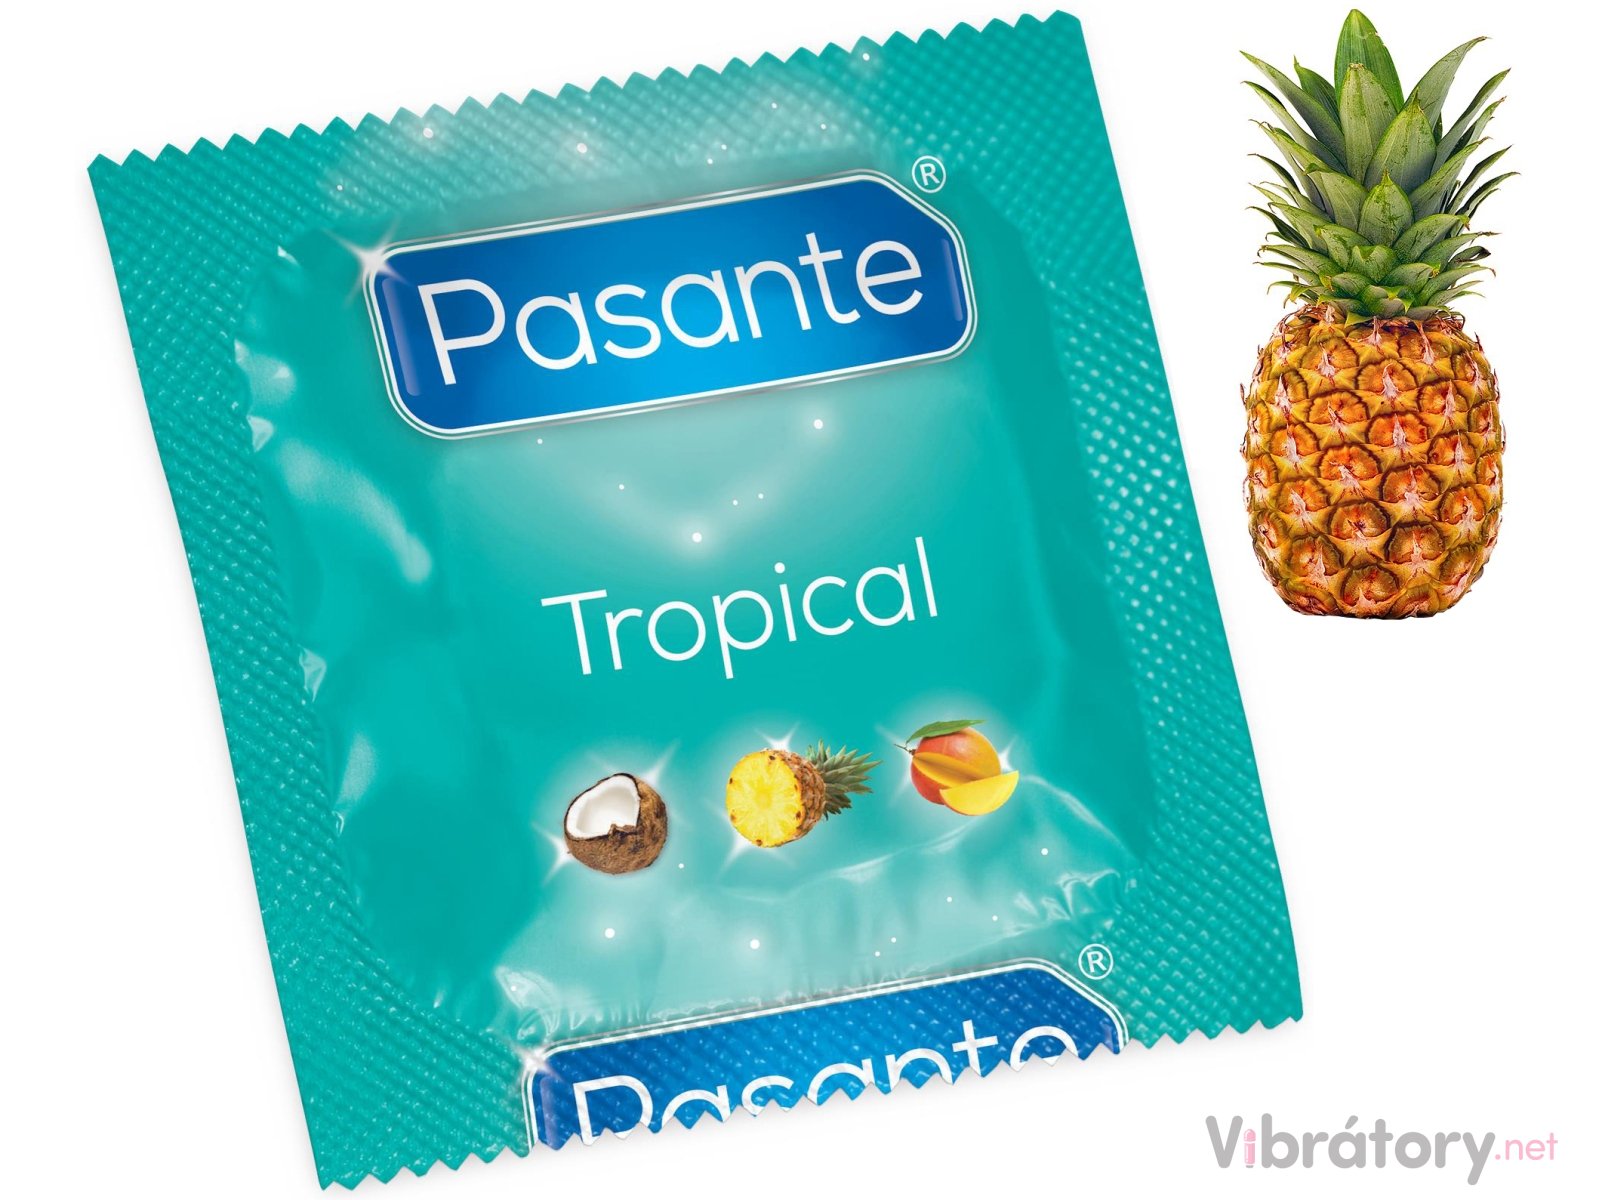 Pasante Tropical Pineapple 1ks